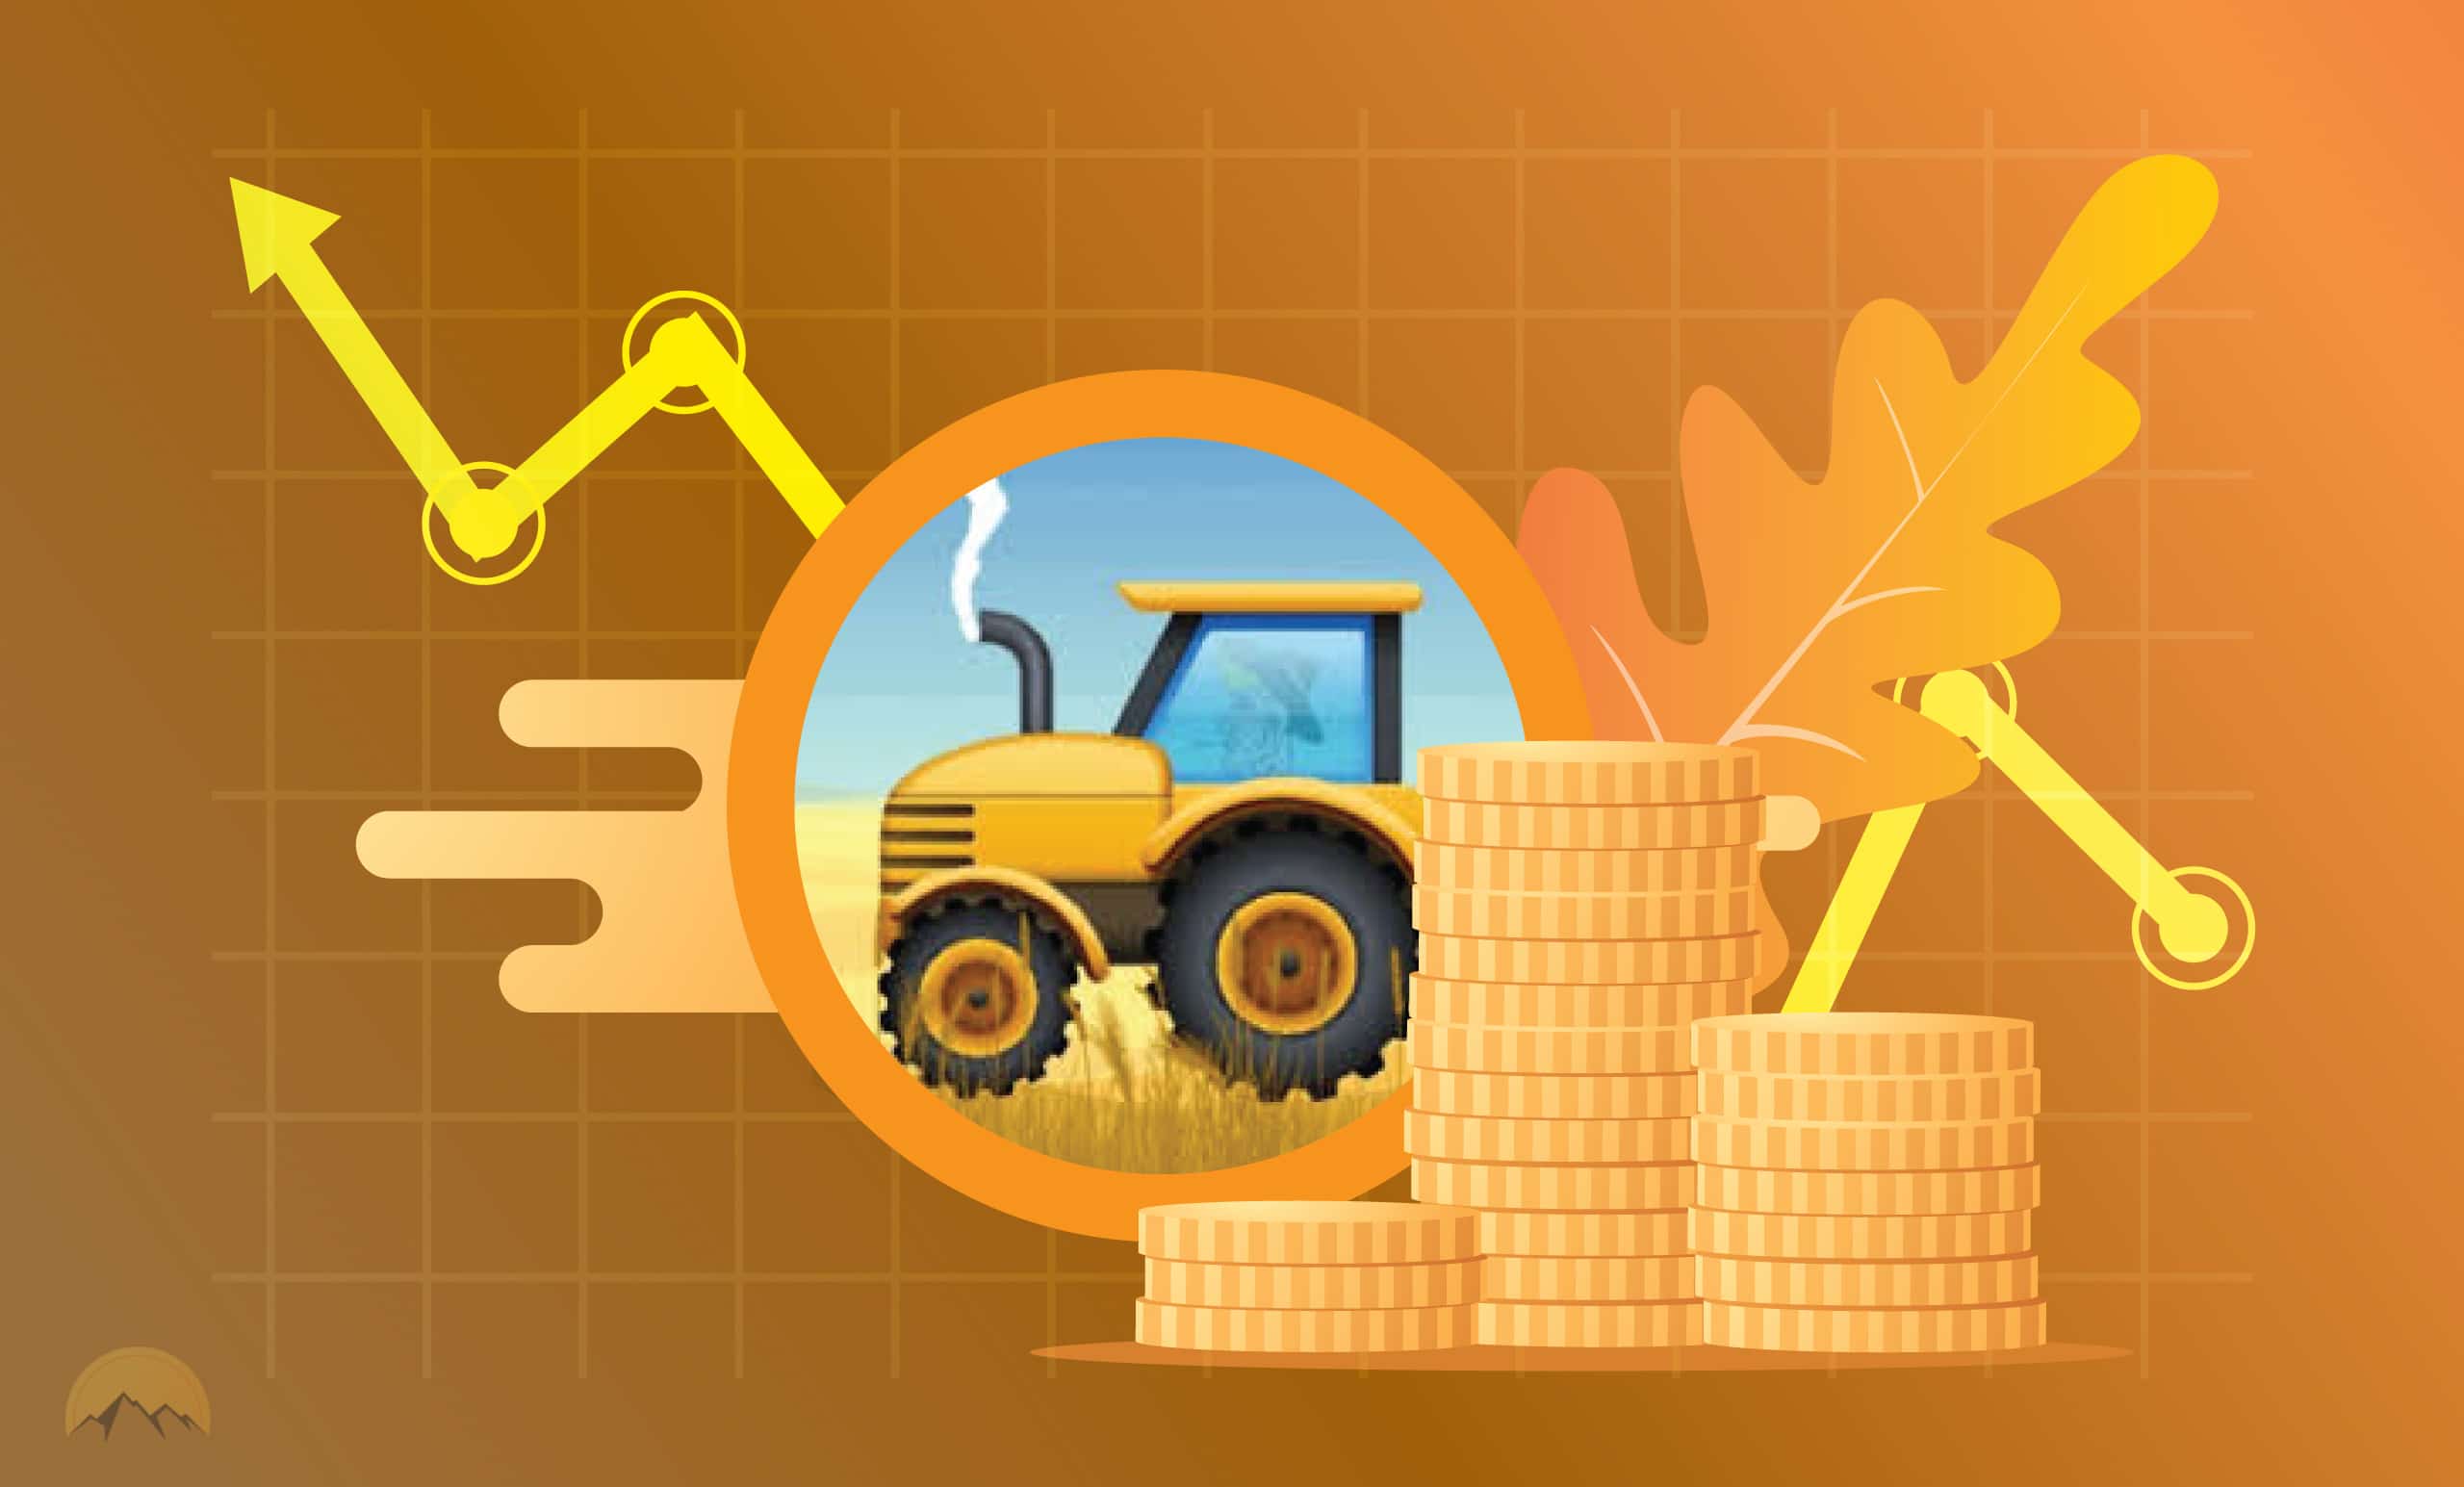 harvest finance predictions